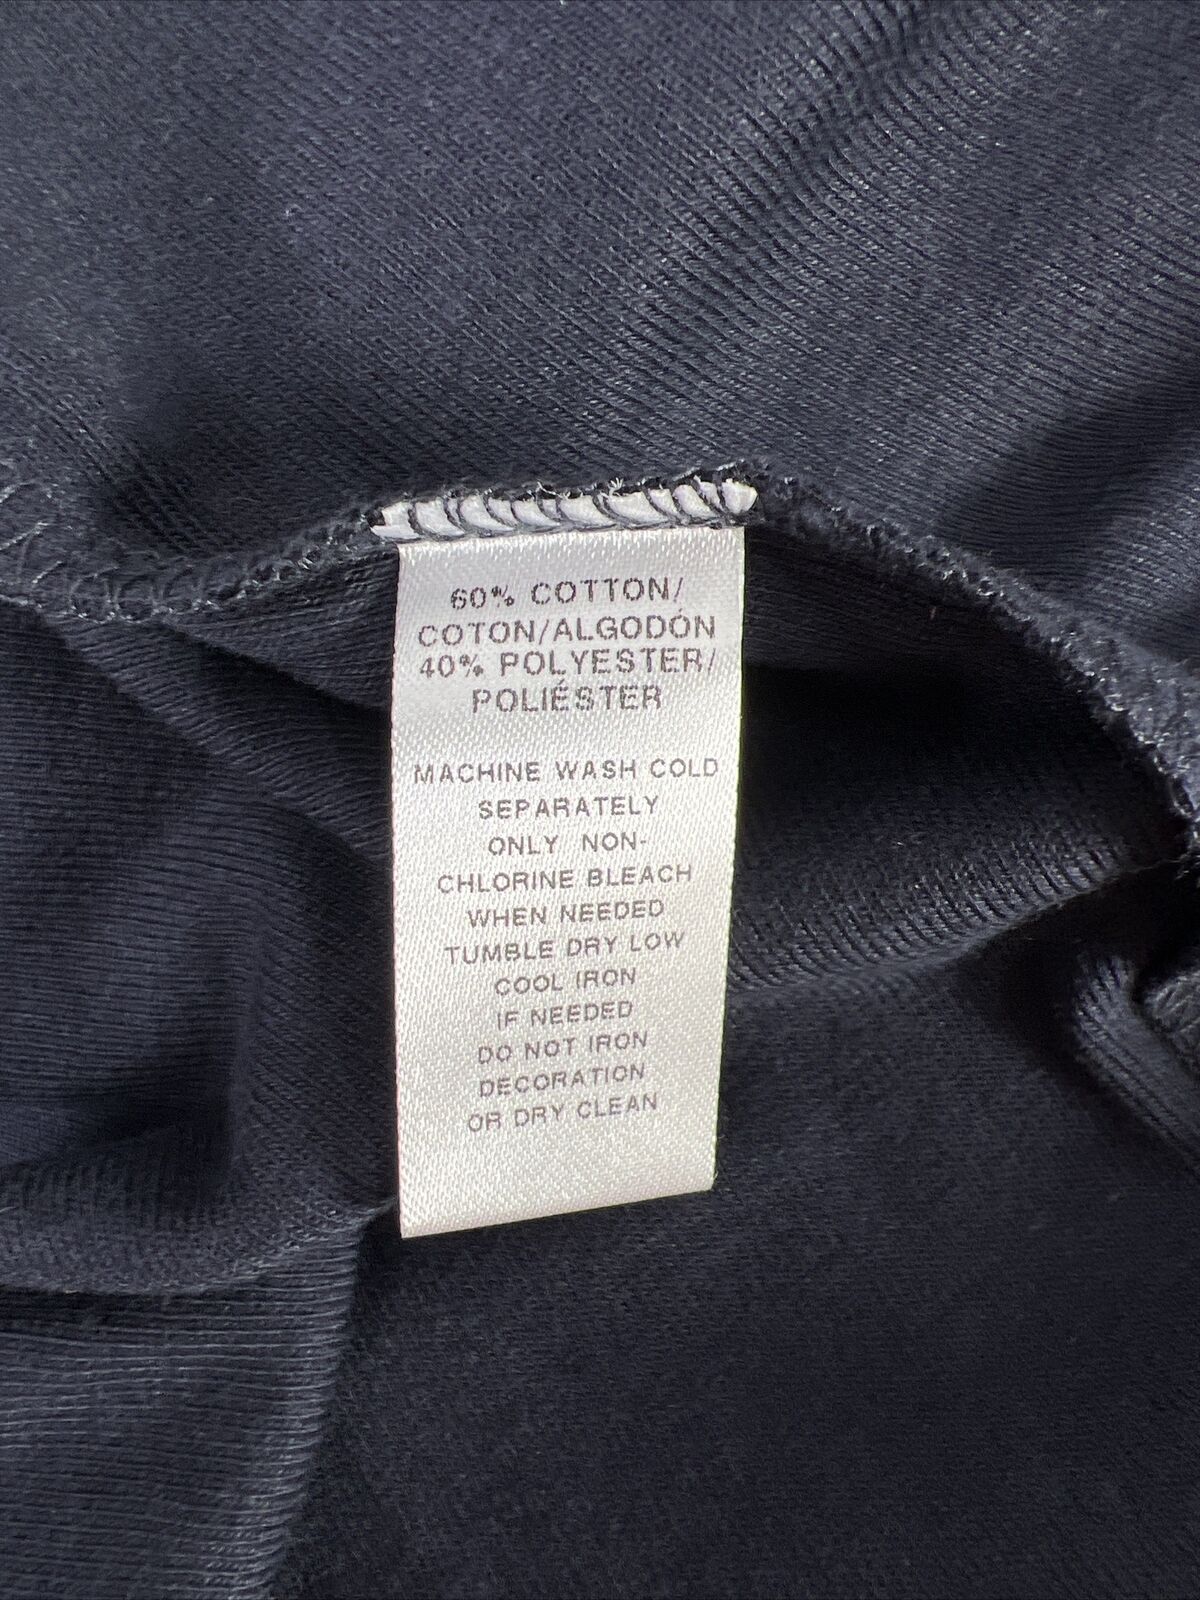 NEW LOFT Women's Navy Blue Long Sleeve Keyhole Back Shirt Top - S